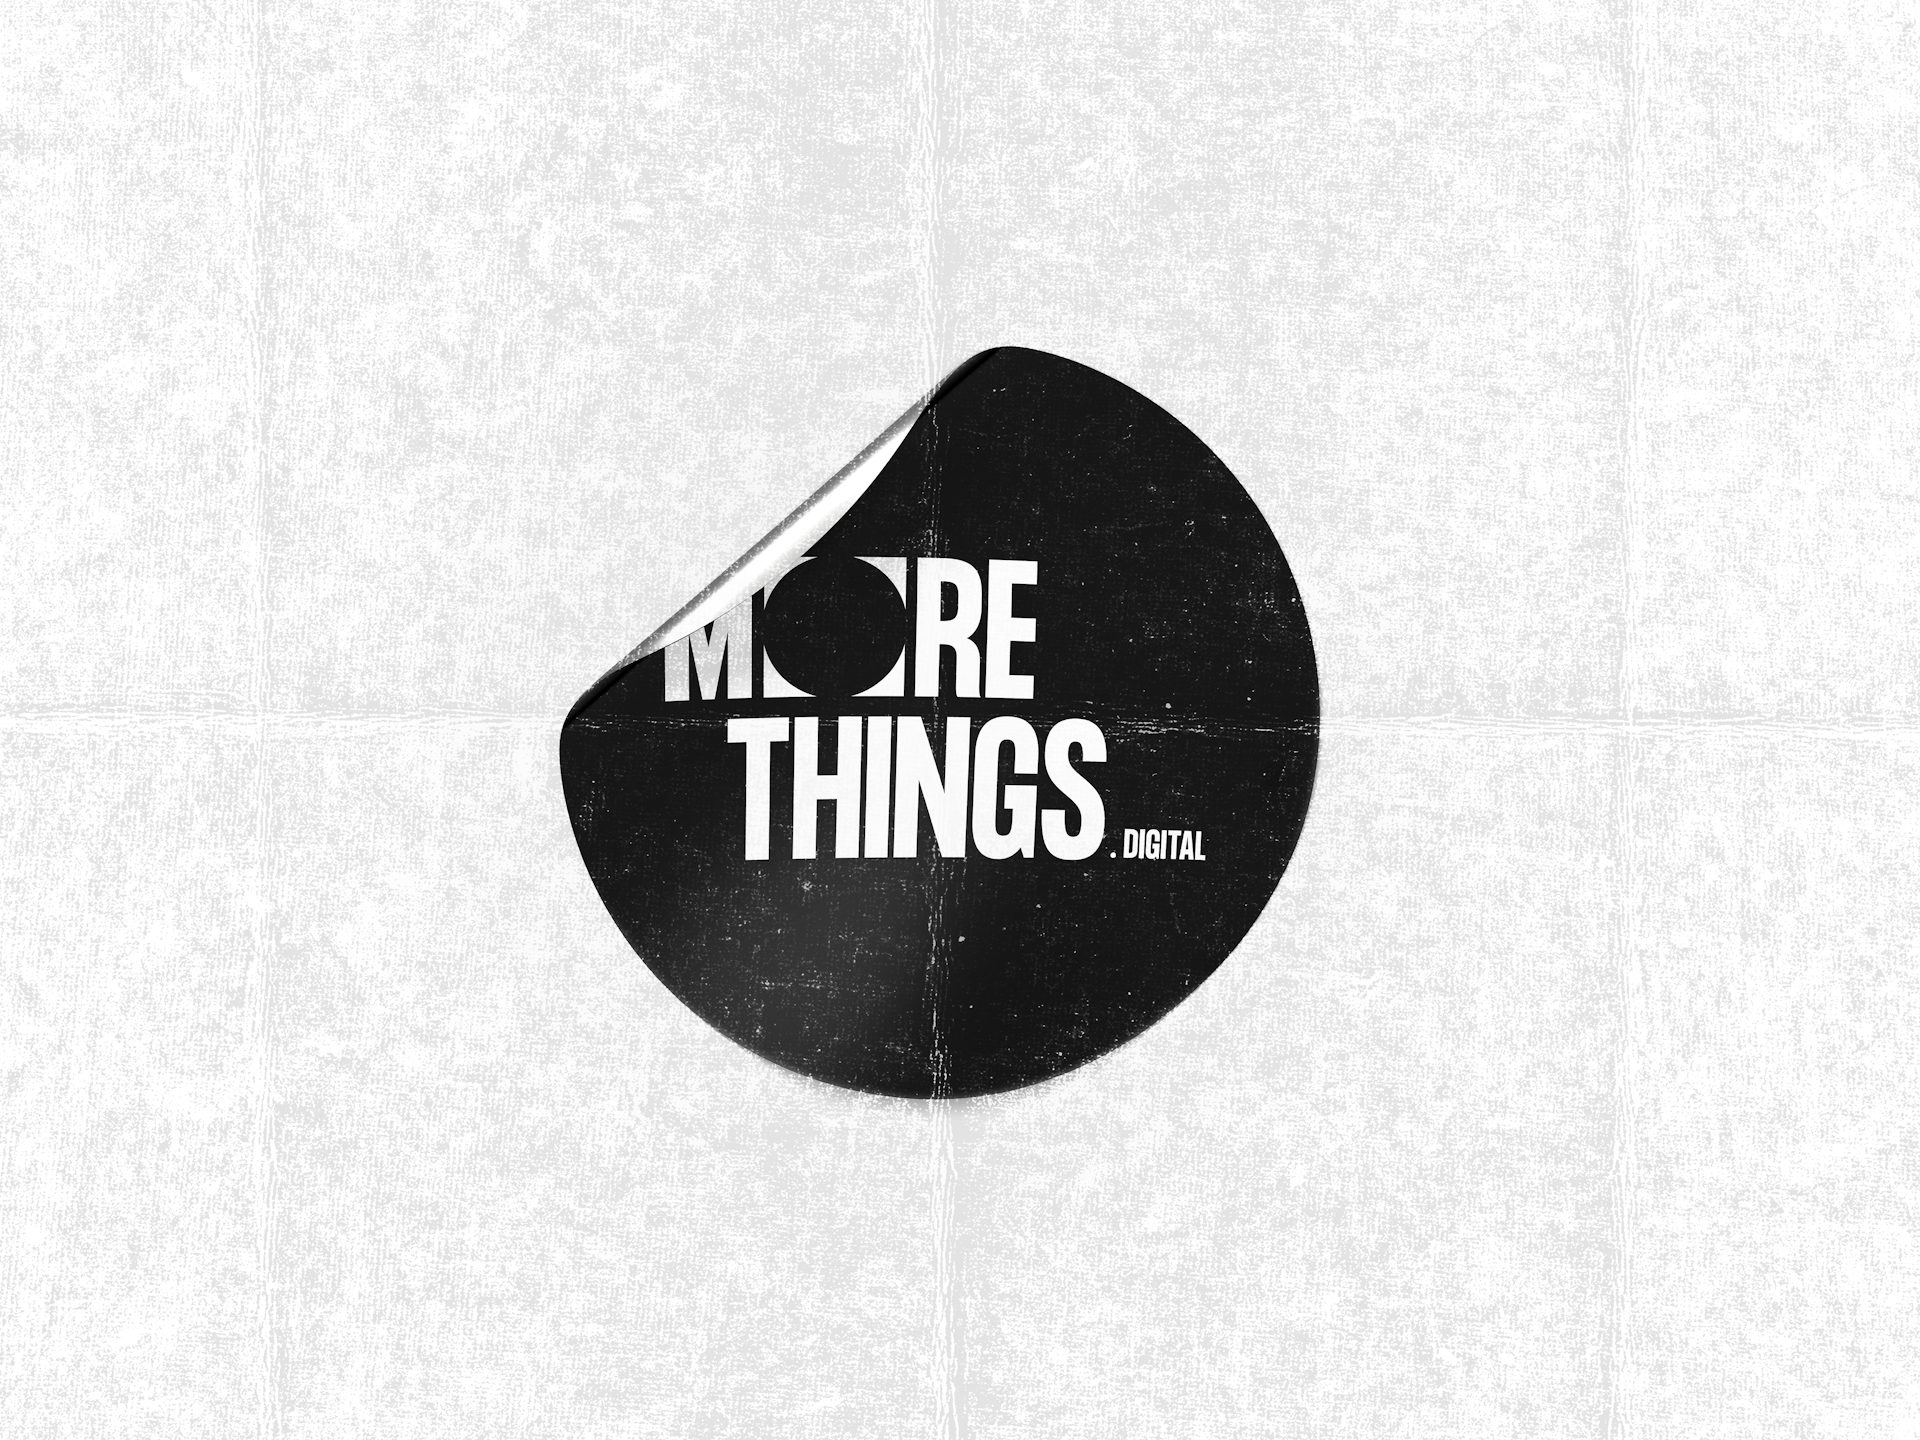 morethings.digital sticker